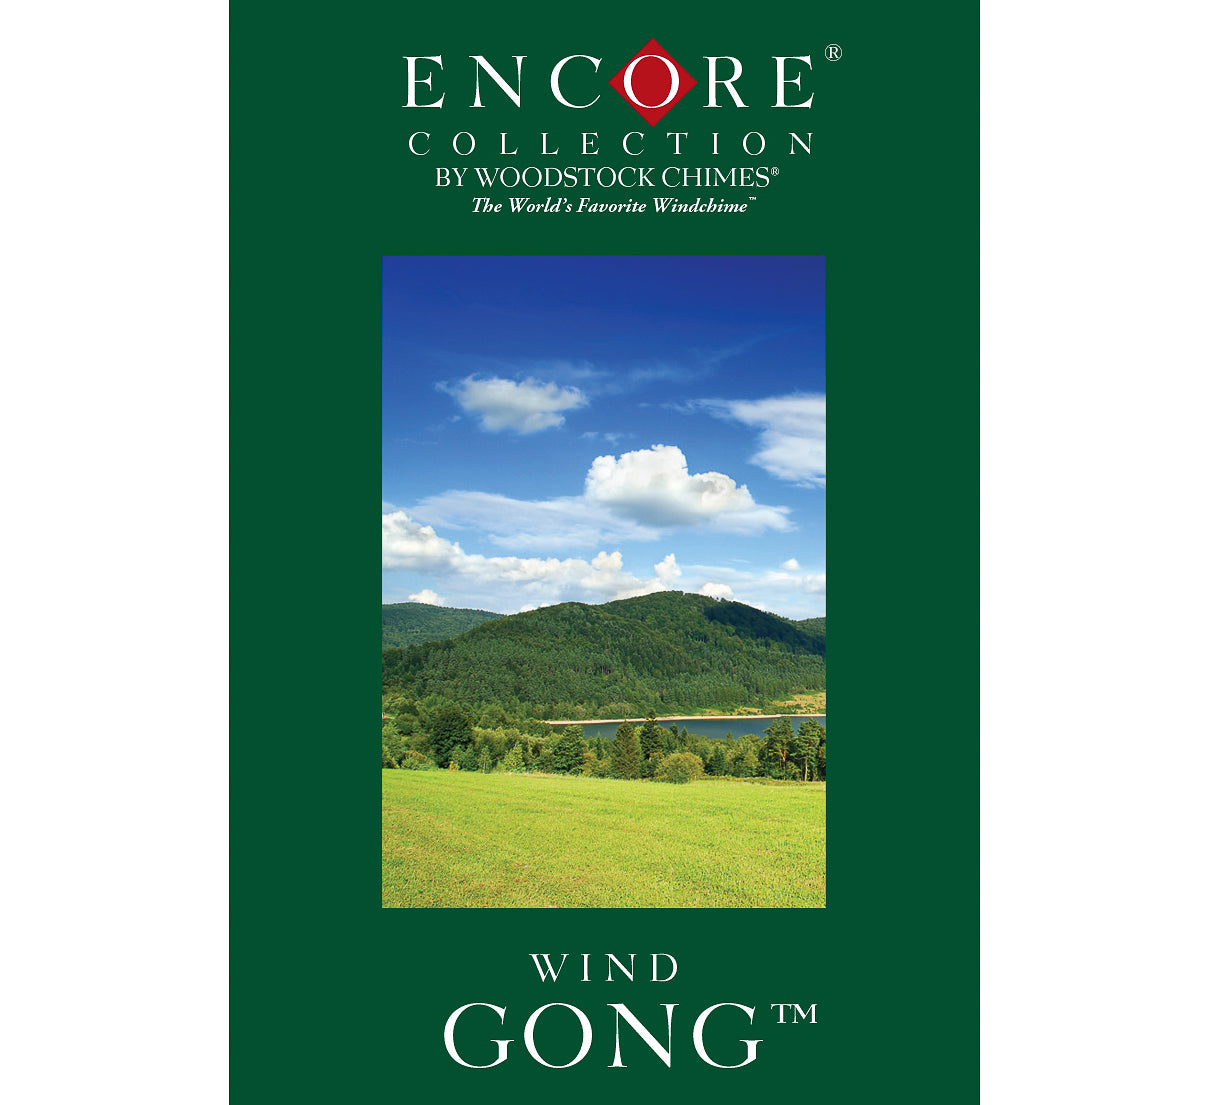 Encore Gong